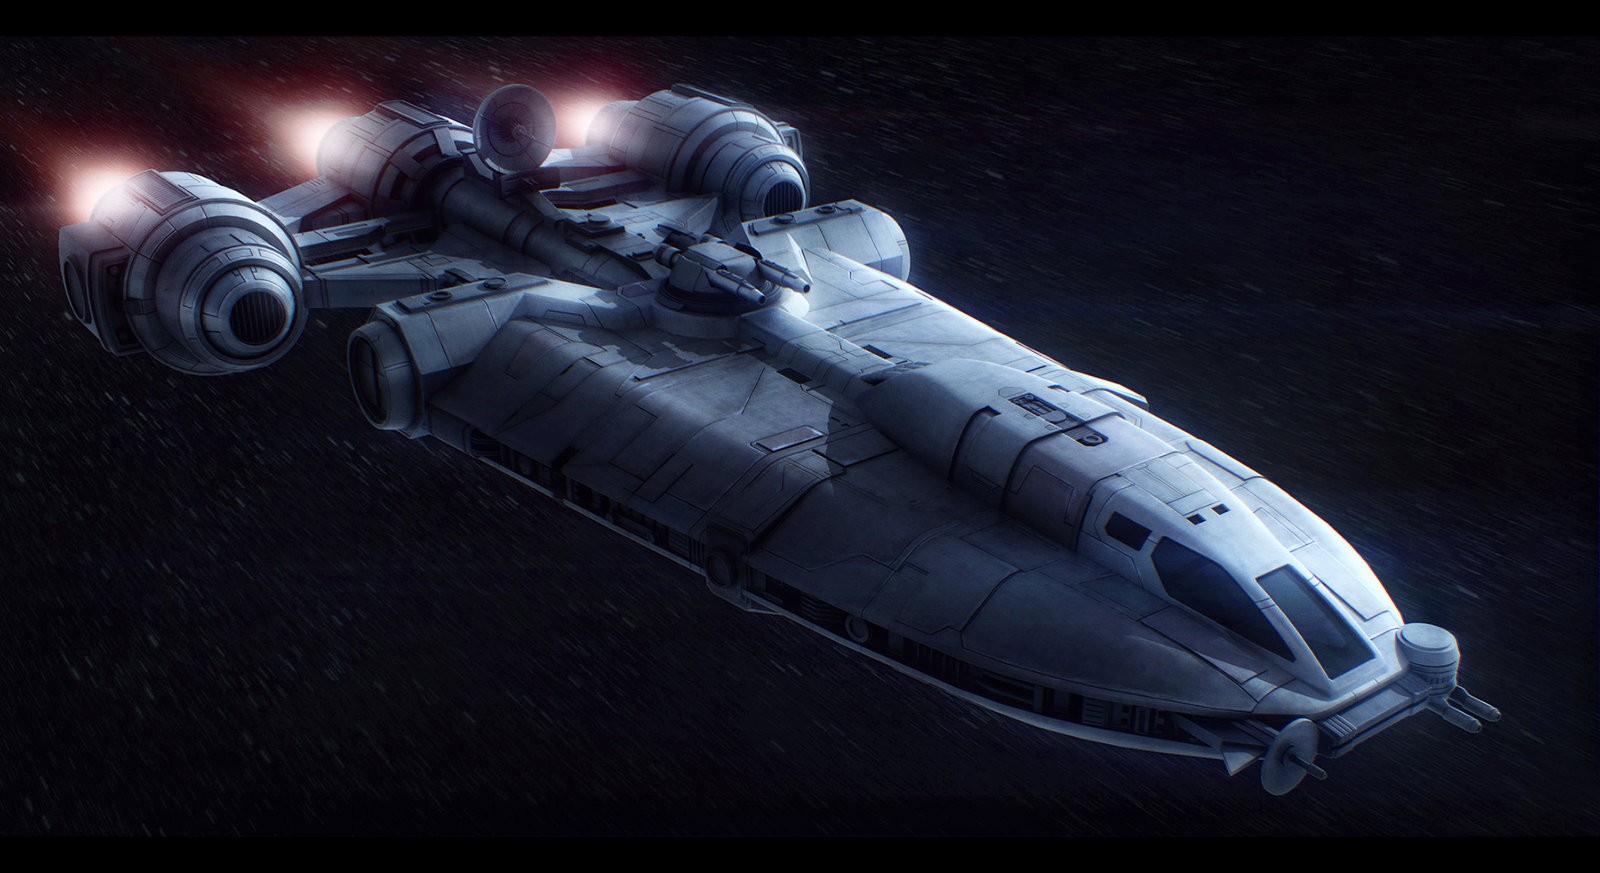 General 1600x873 Star Wars frigates science fiction vehicle spaceship Star Wars Ships